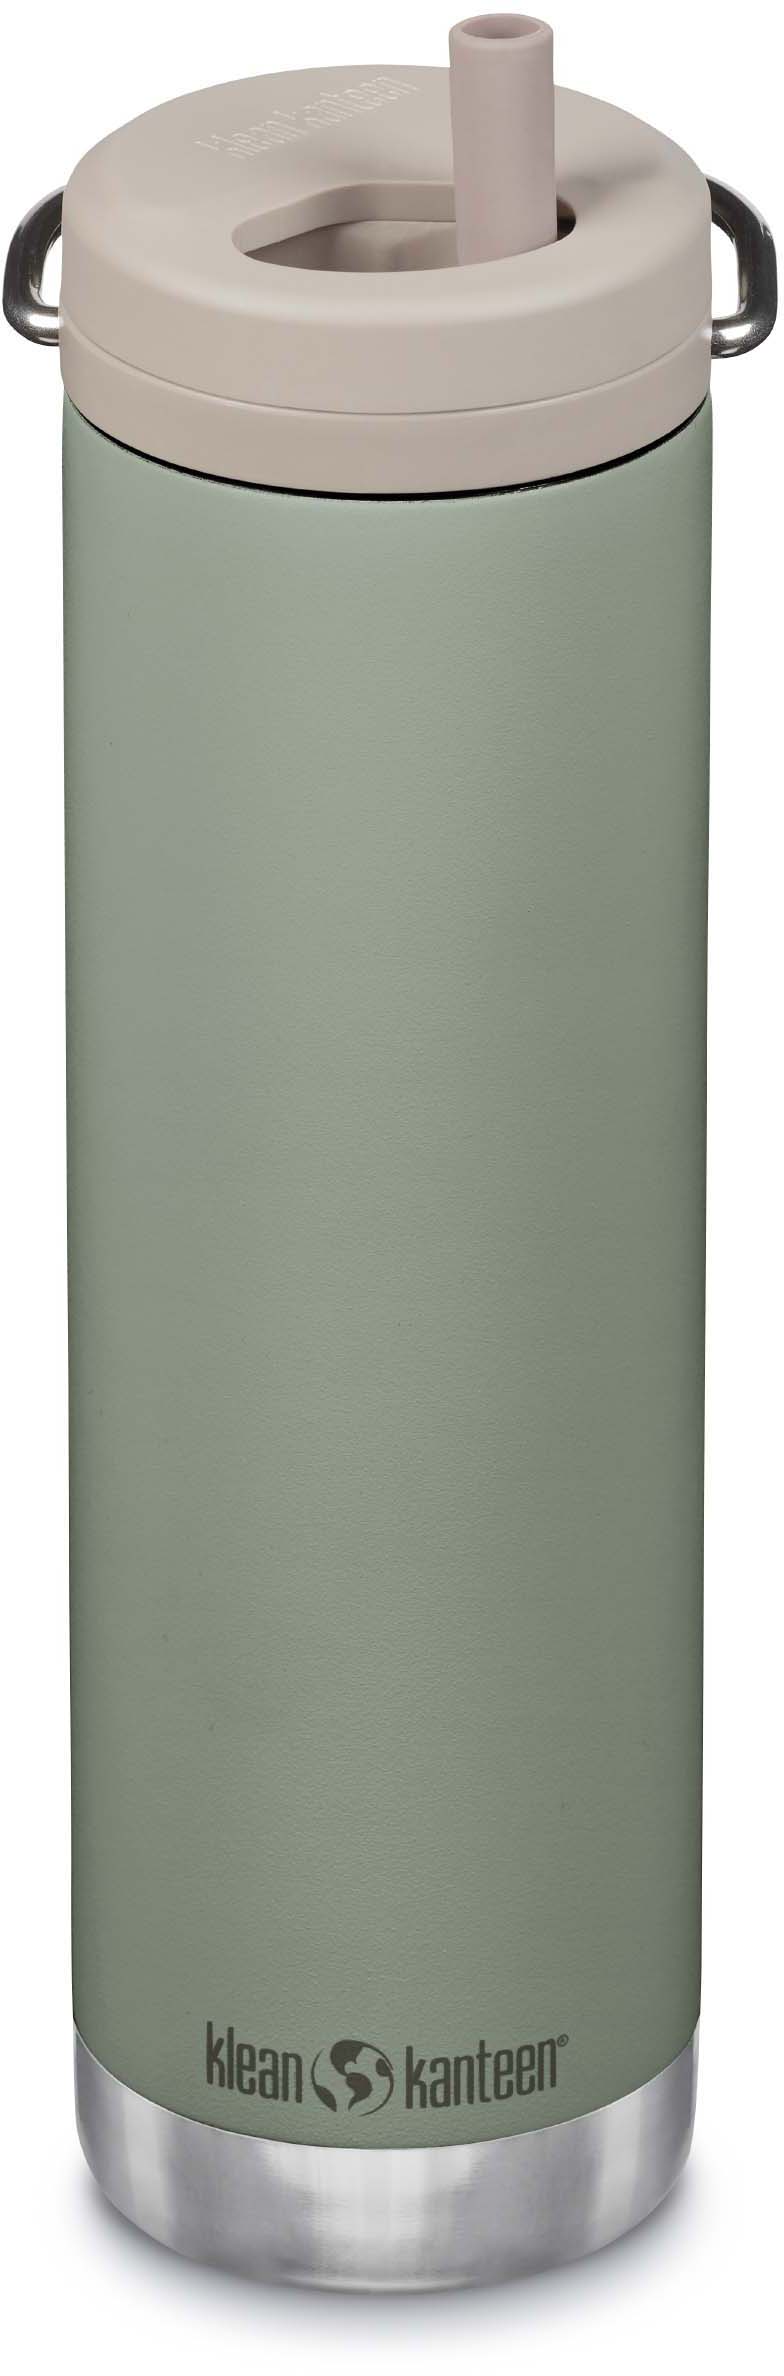 Klean Kanteen 20oz Insulated Chrome Water Bottle – The Surfrider